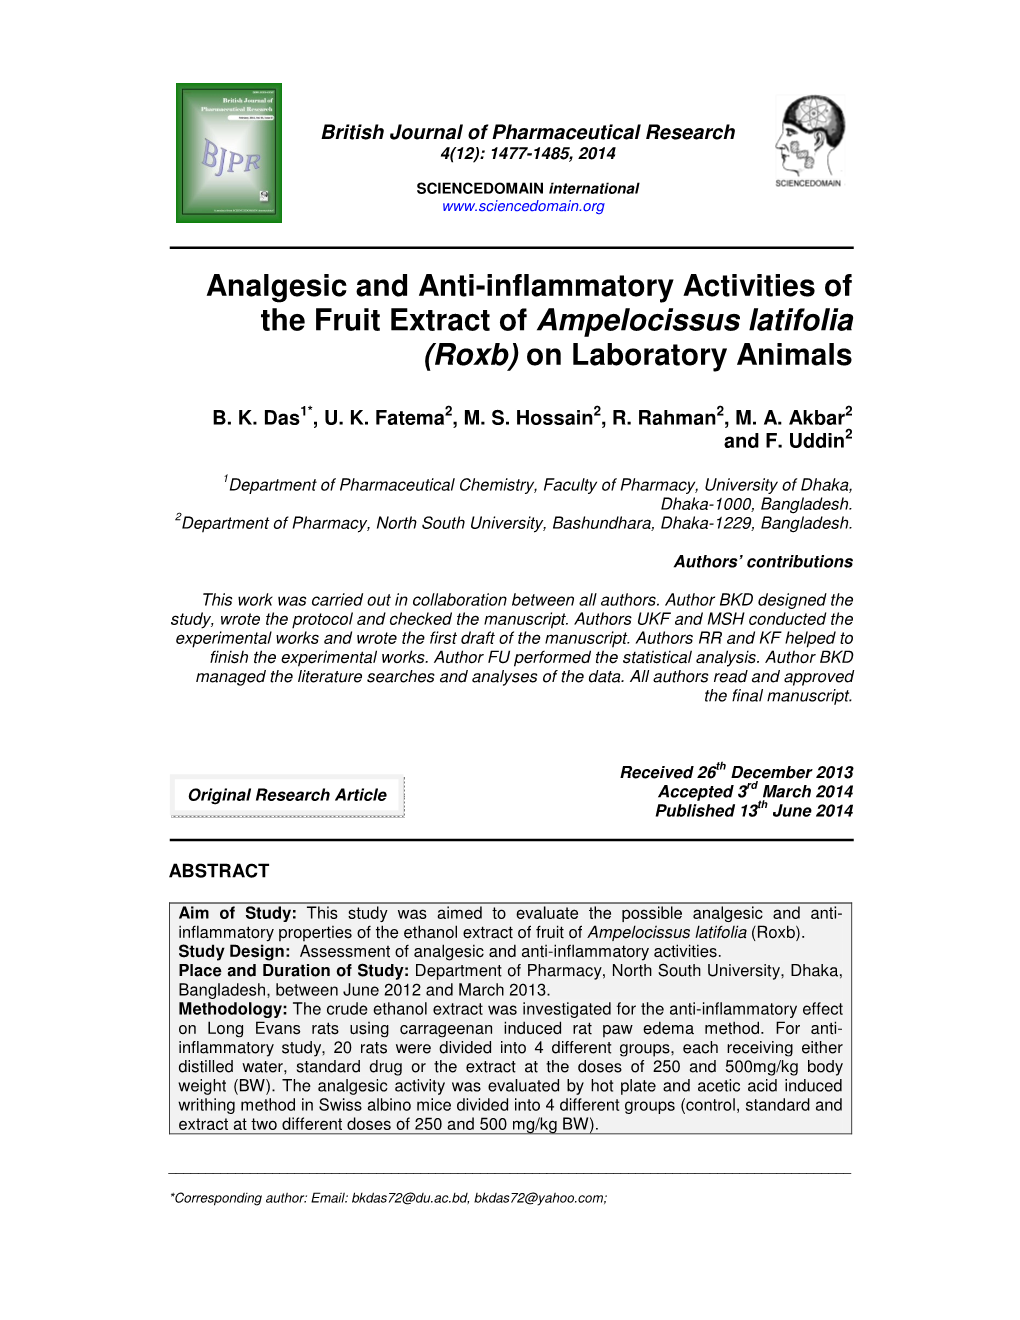 Analgesic and Anti-Inflammatory Activities of the Fruit Extract of Ampelocissus Latifolia (Roxb) on Laboratory Animals